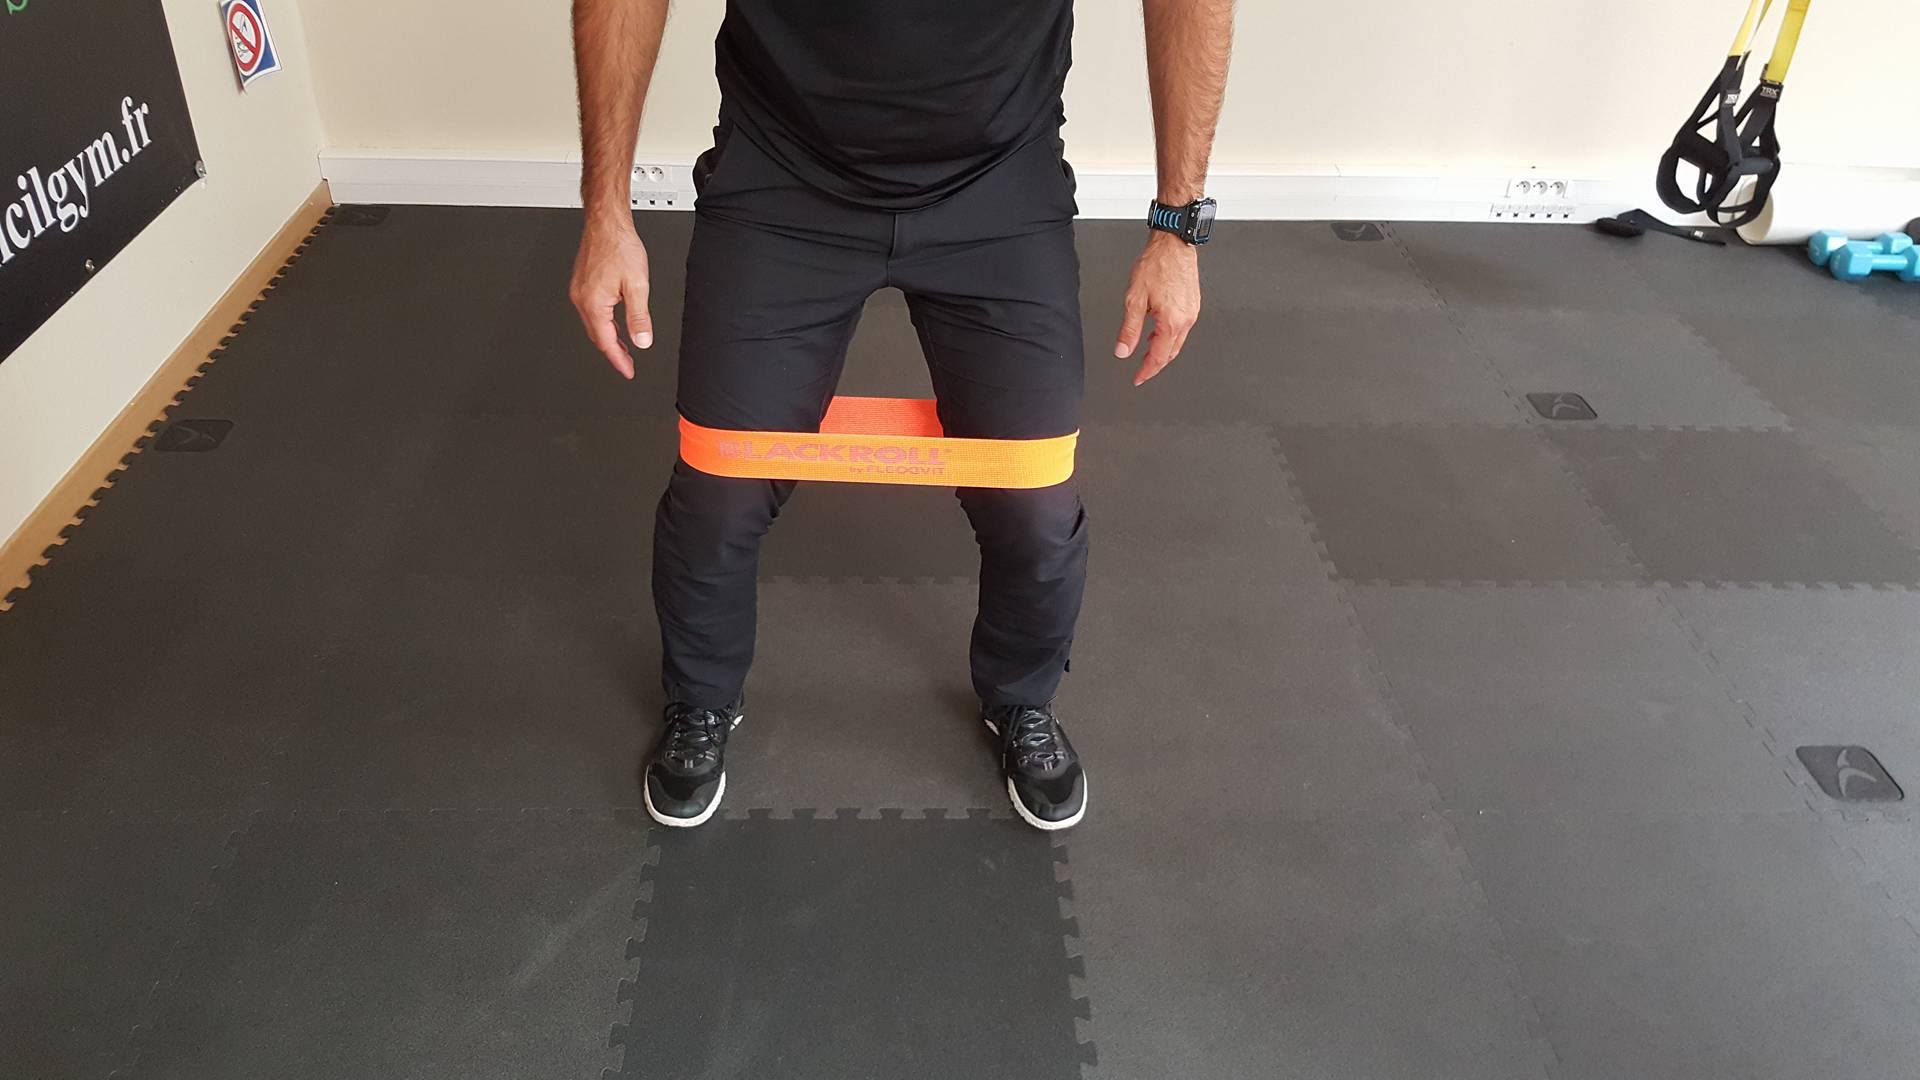 Blackroll ® Loop Band Set entraînement bandes musculaires Training Bracelet connecté